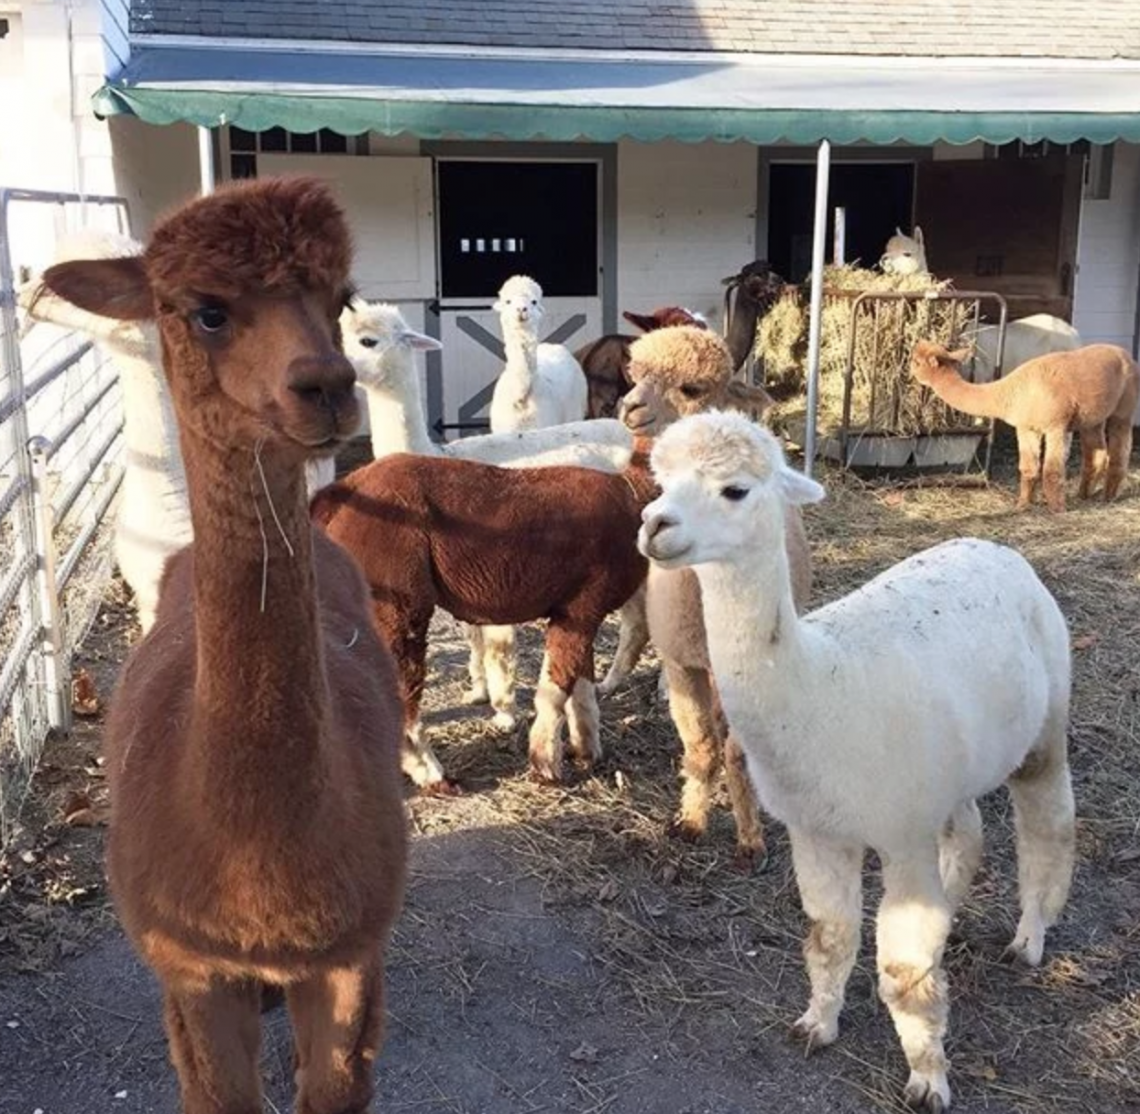 alpaca farm to visit near me